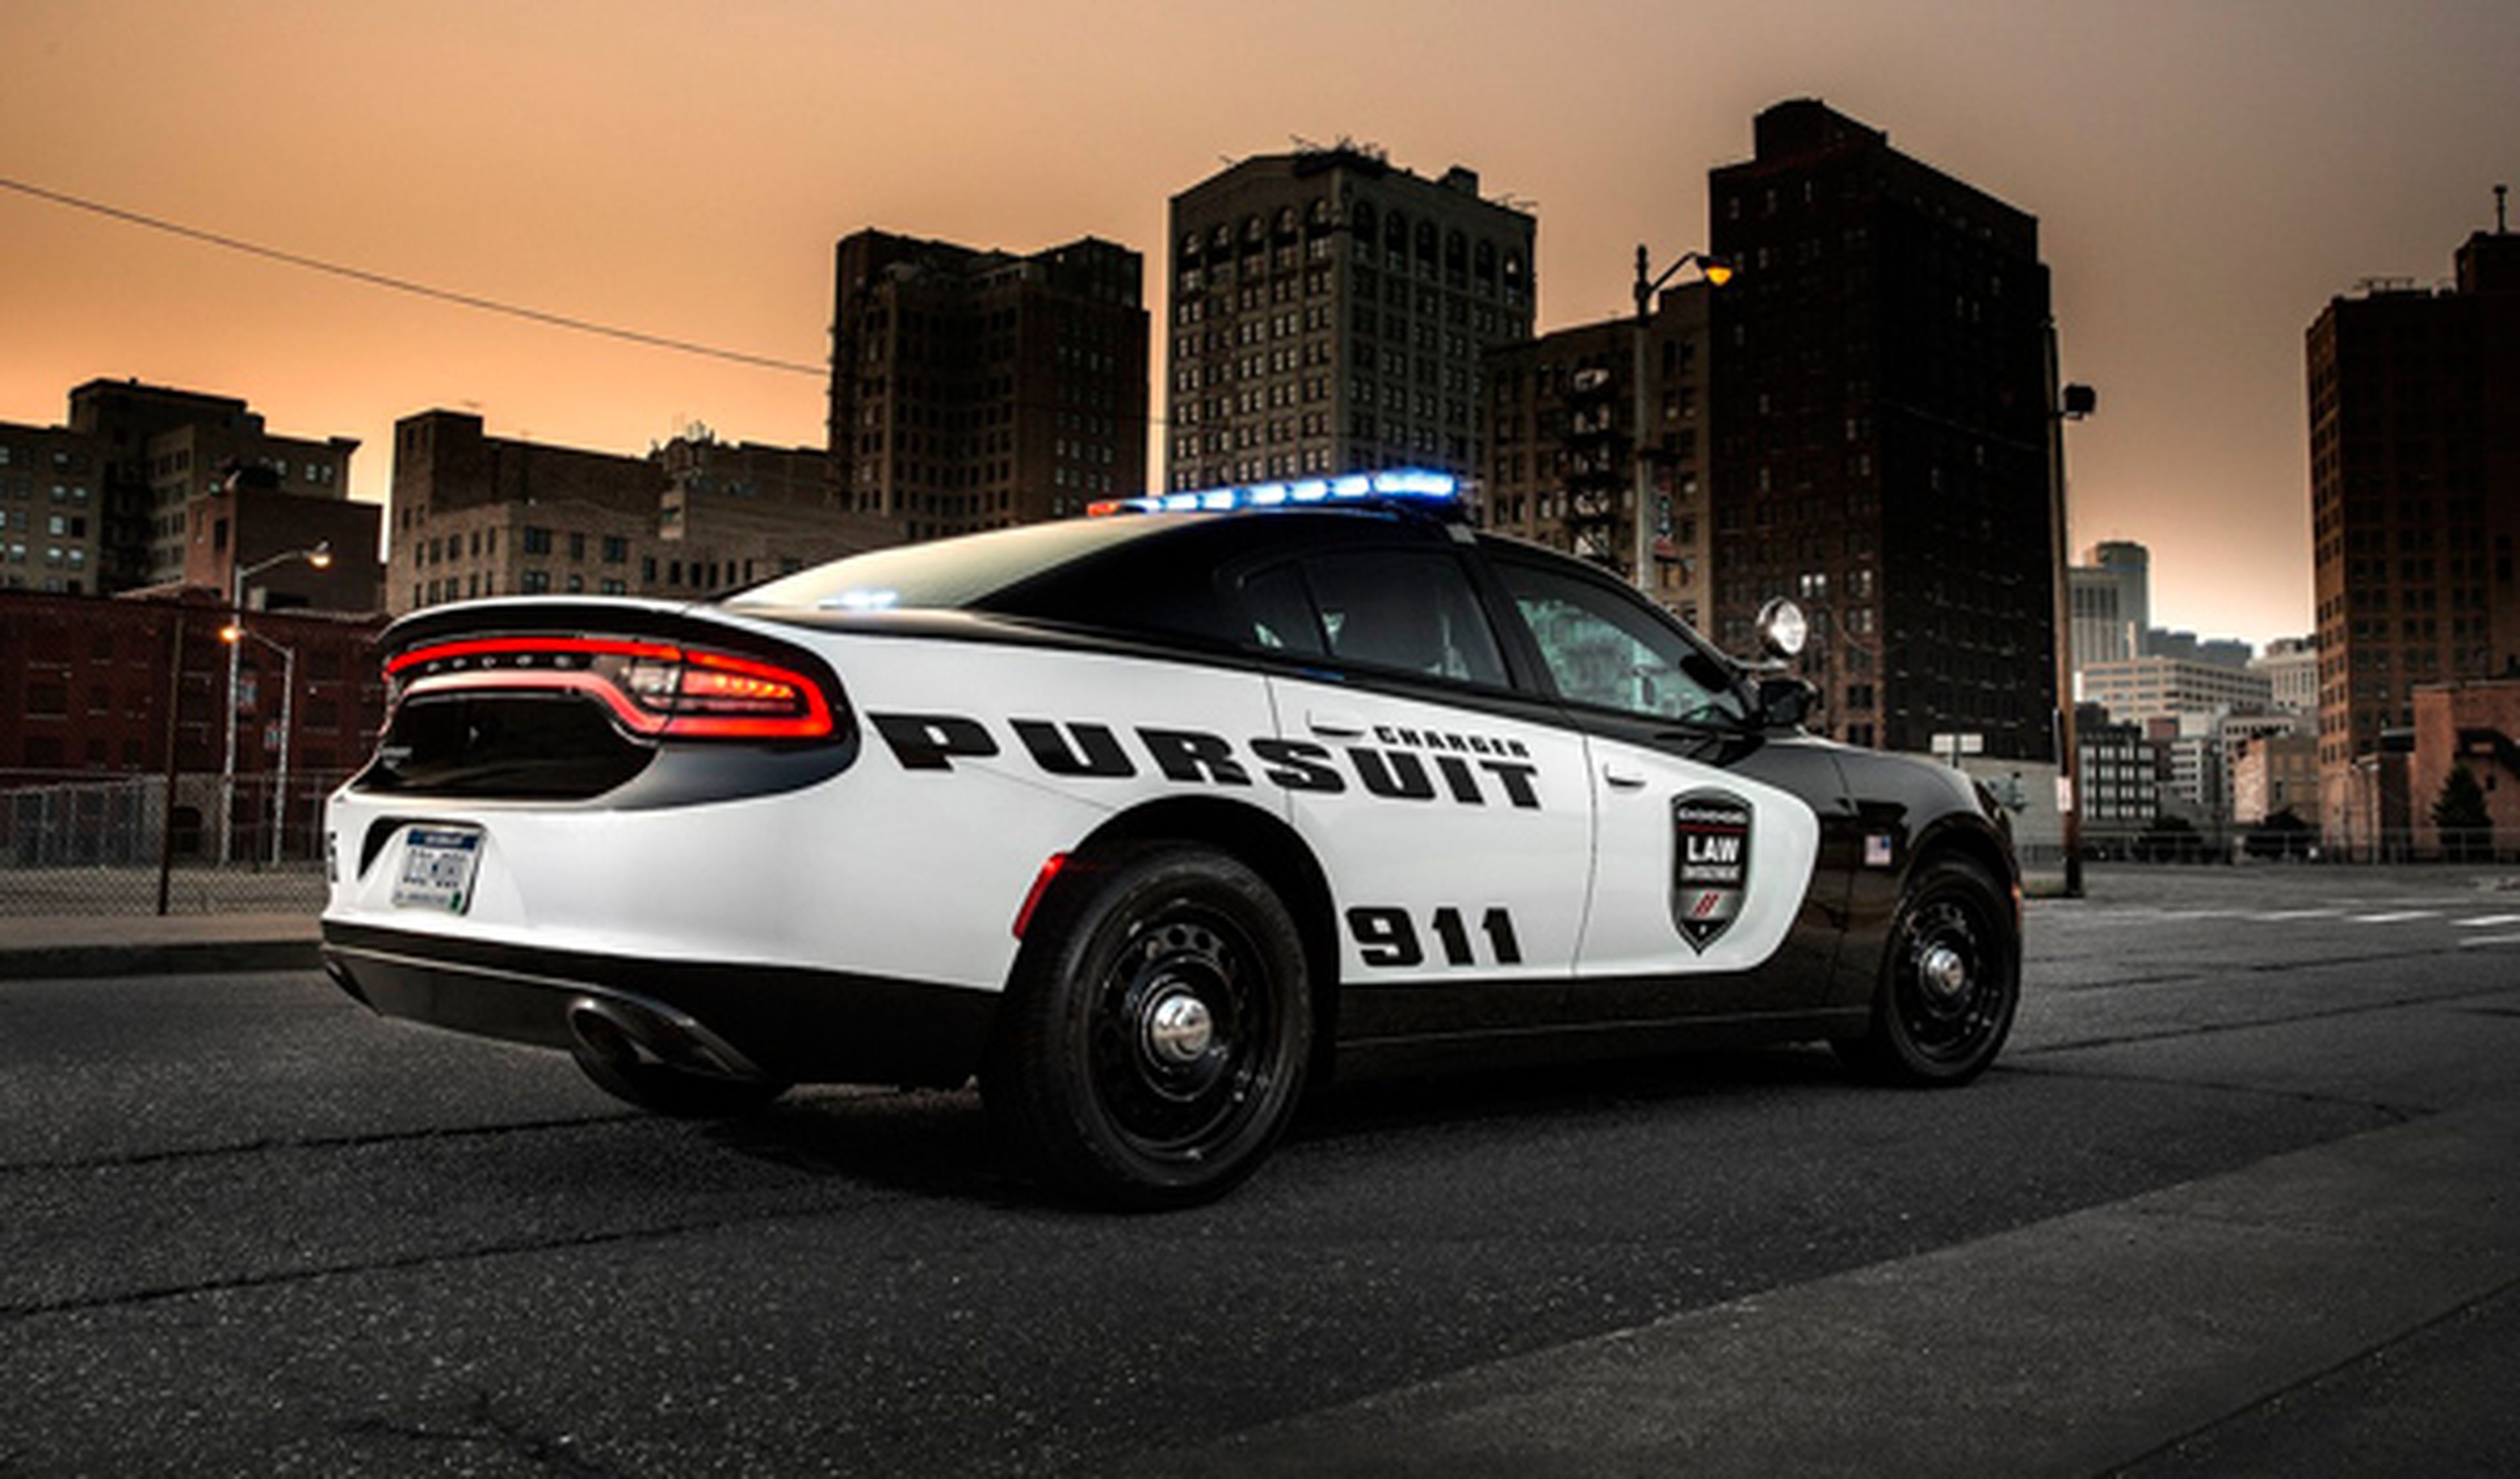 8 experiencias que sentirás al conducir un coche de policía